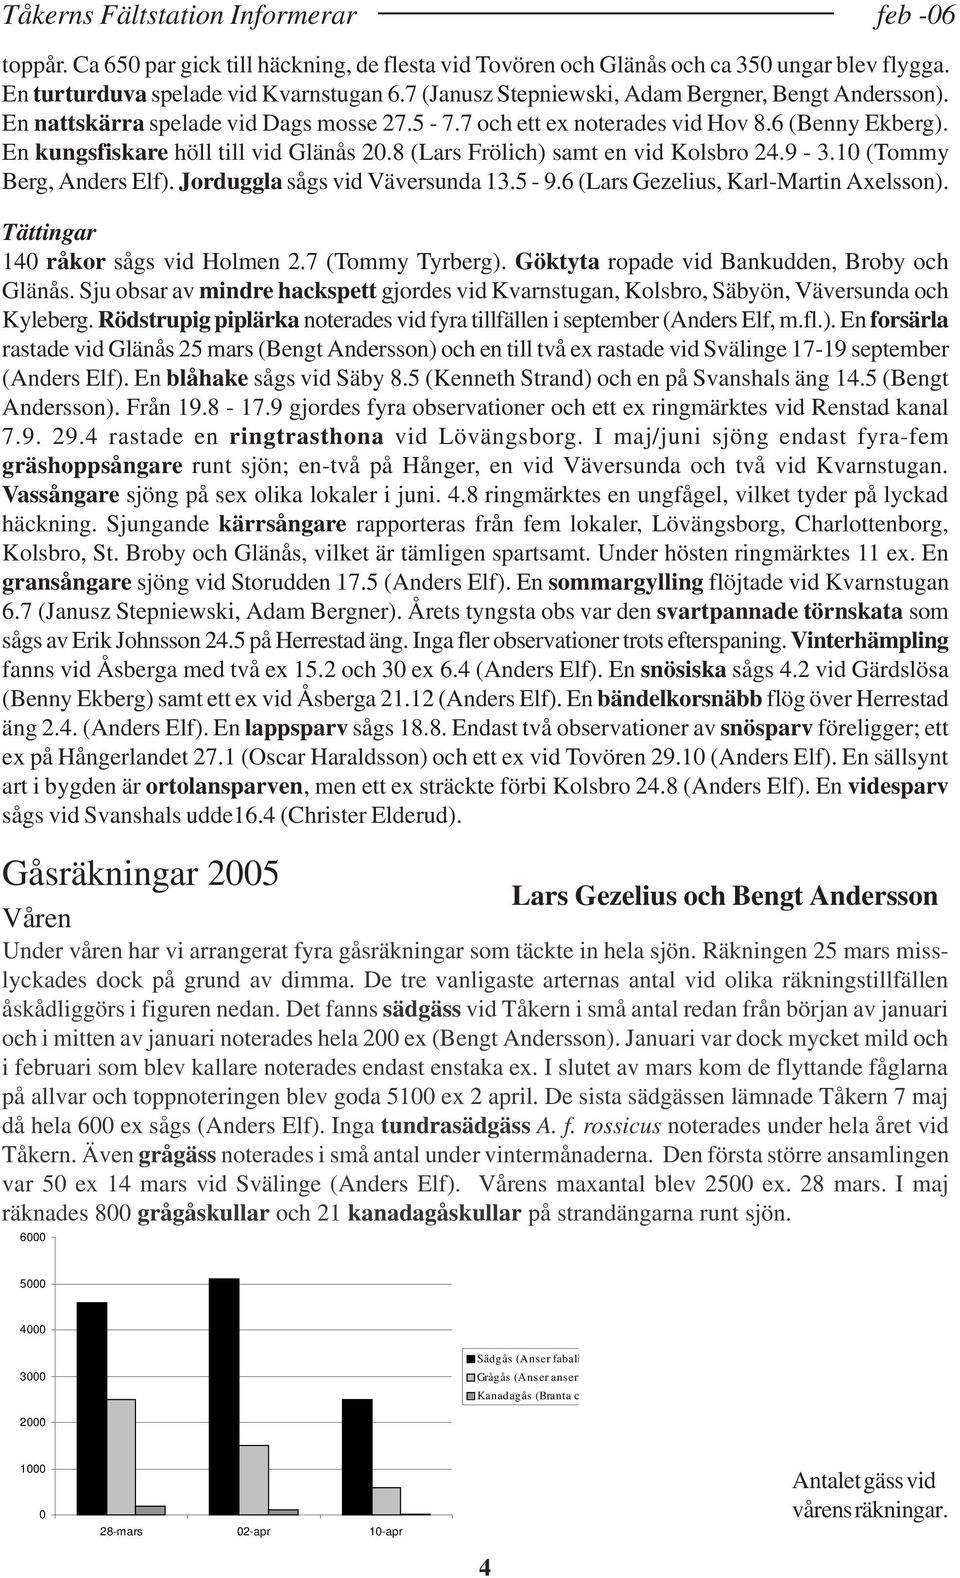 10 (Tommy Berg, Anders Elf). Jorduggla sågs vid Väversunda 13.5-9.6 (Lars Gezelius, Karl-Martin Axelsson). Tättingar 140 råkor sågs vid Holmen 2.7 (Tommy Tyrberg).